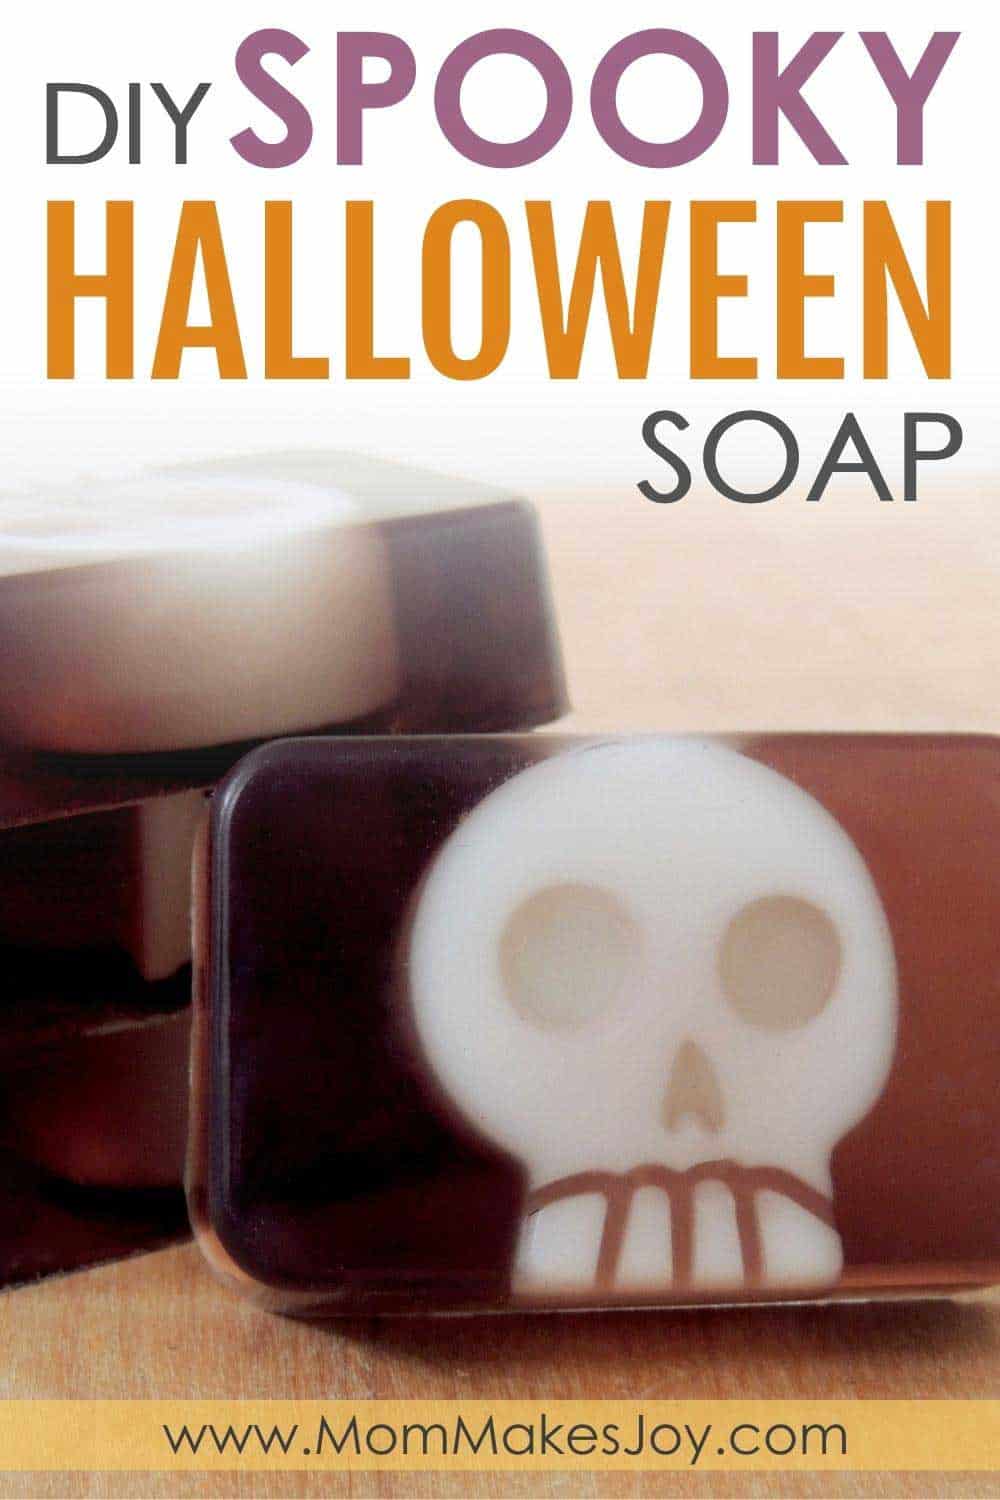 DIY Spooky Halloween Soap